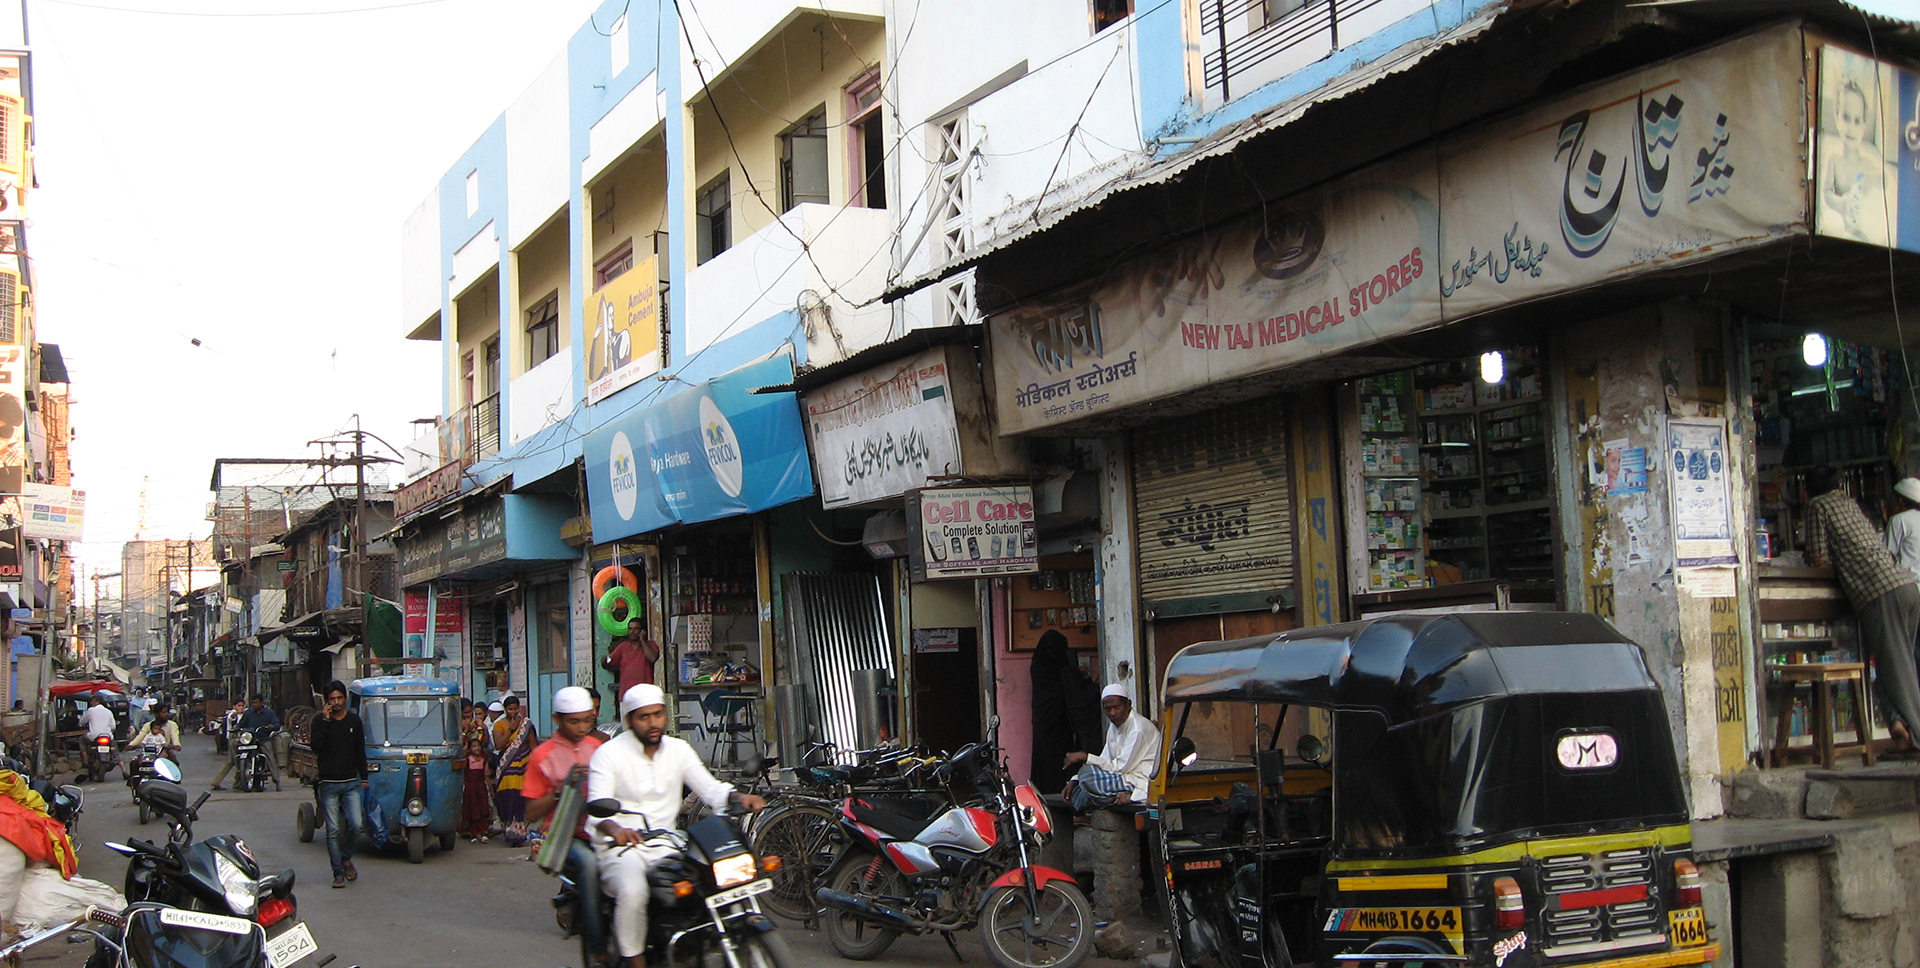 Ansar Road Medical Stores